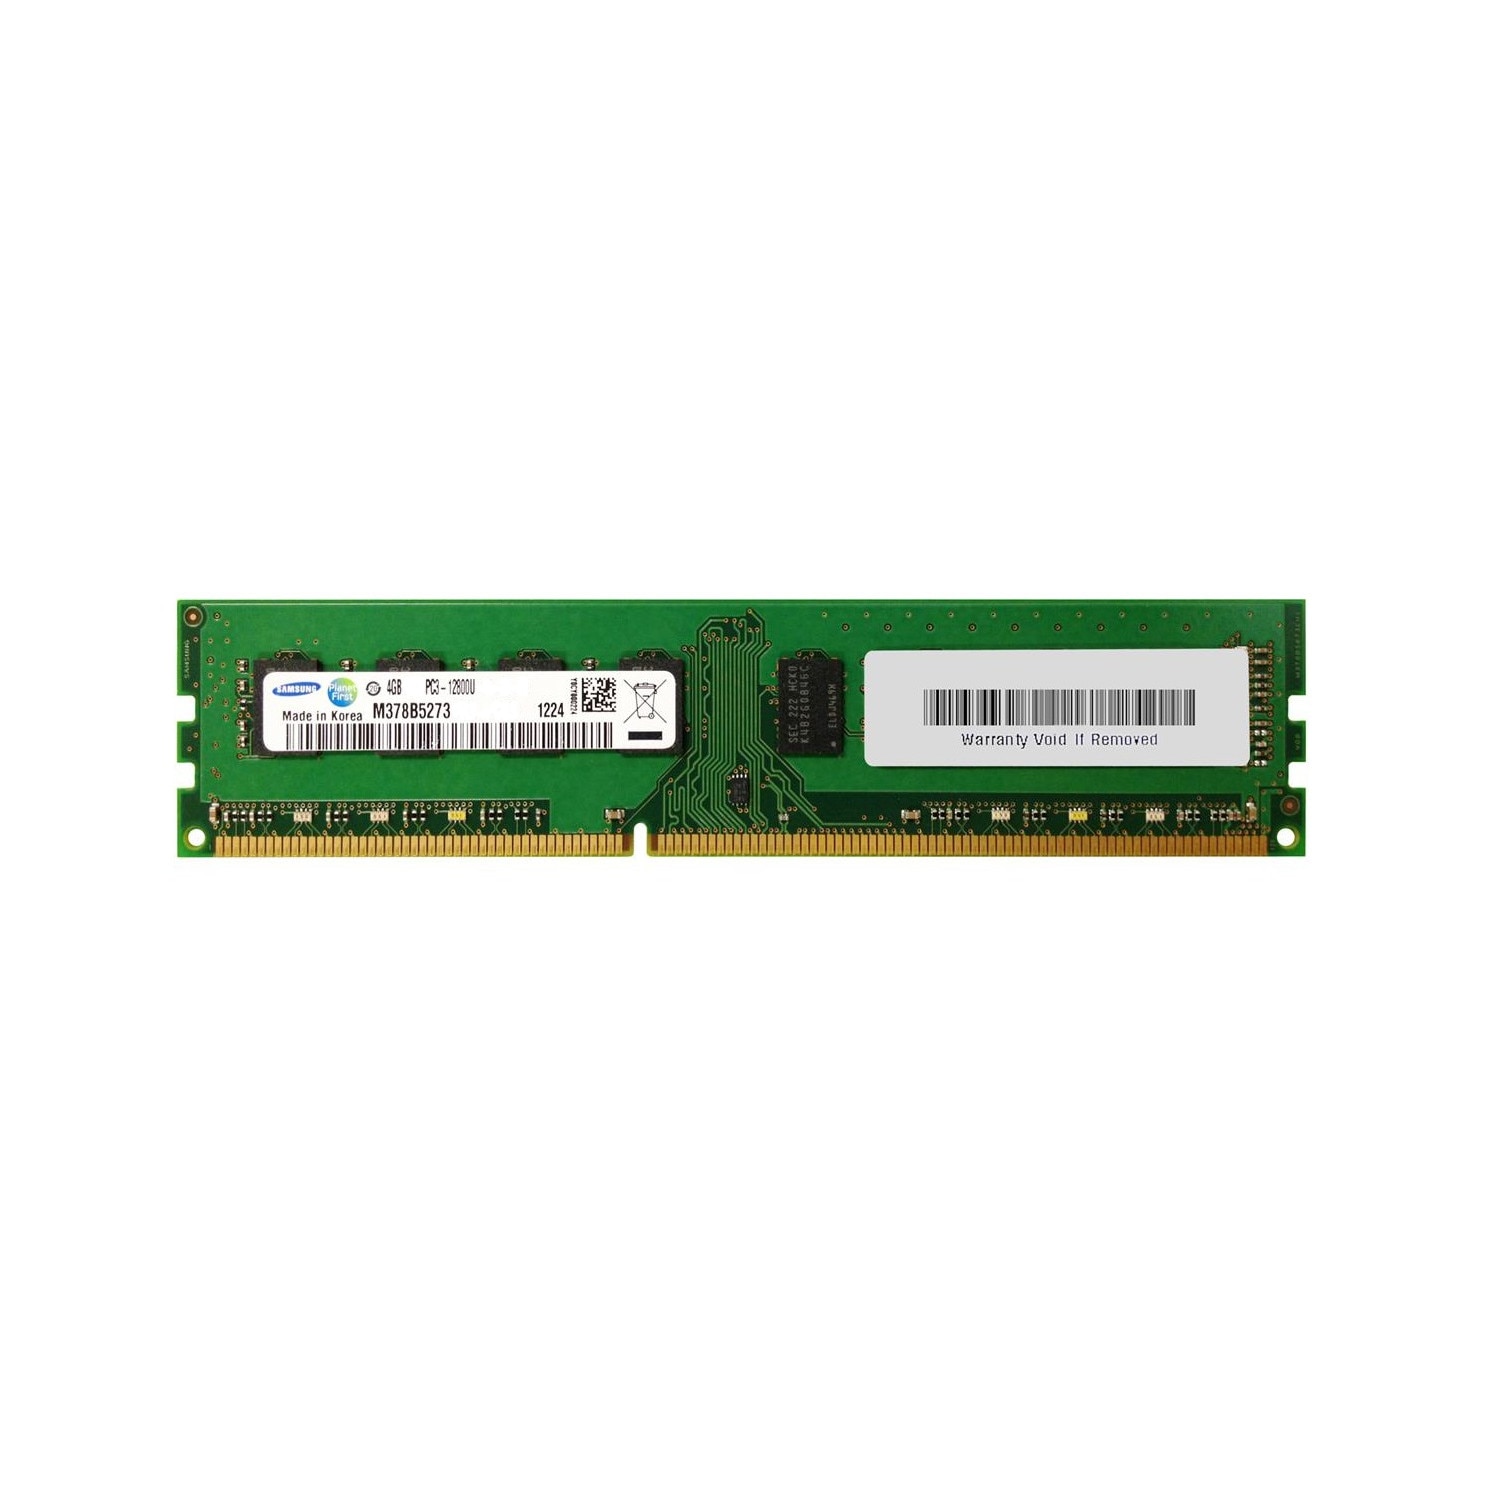 Memorie Samsung GB 1Rx8 PC3-12800U, bulk